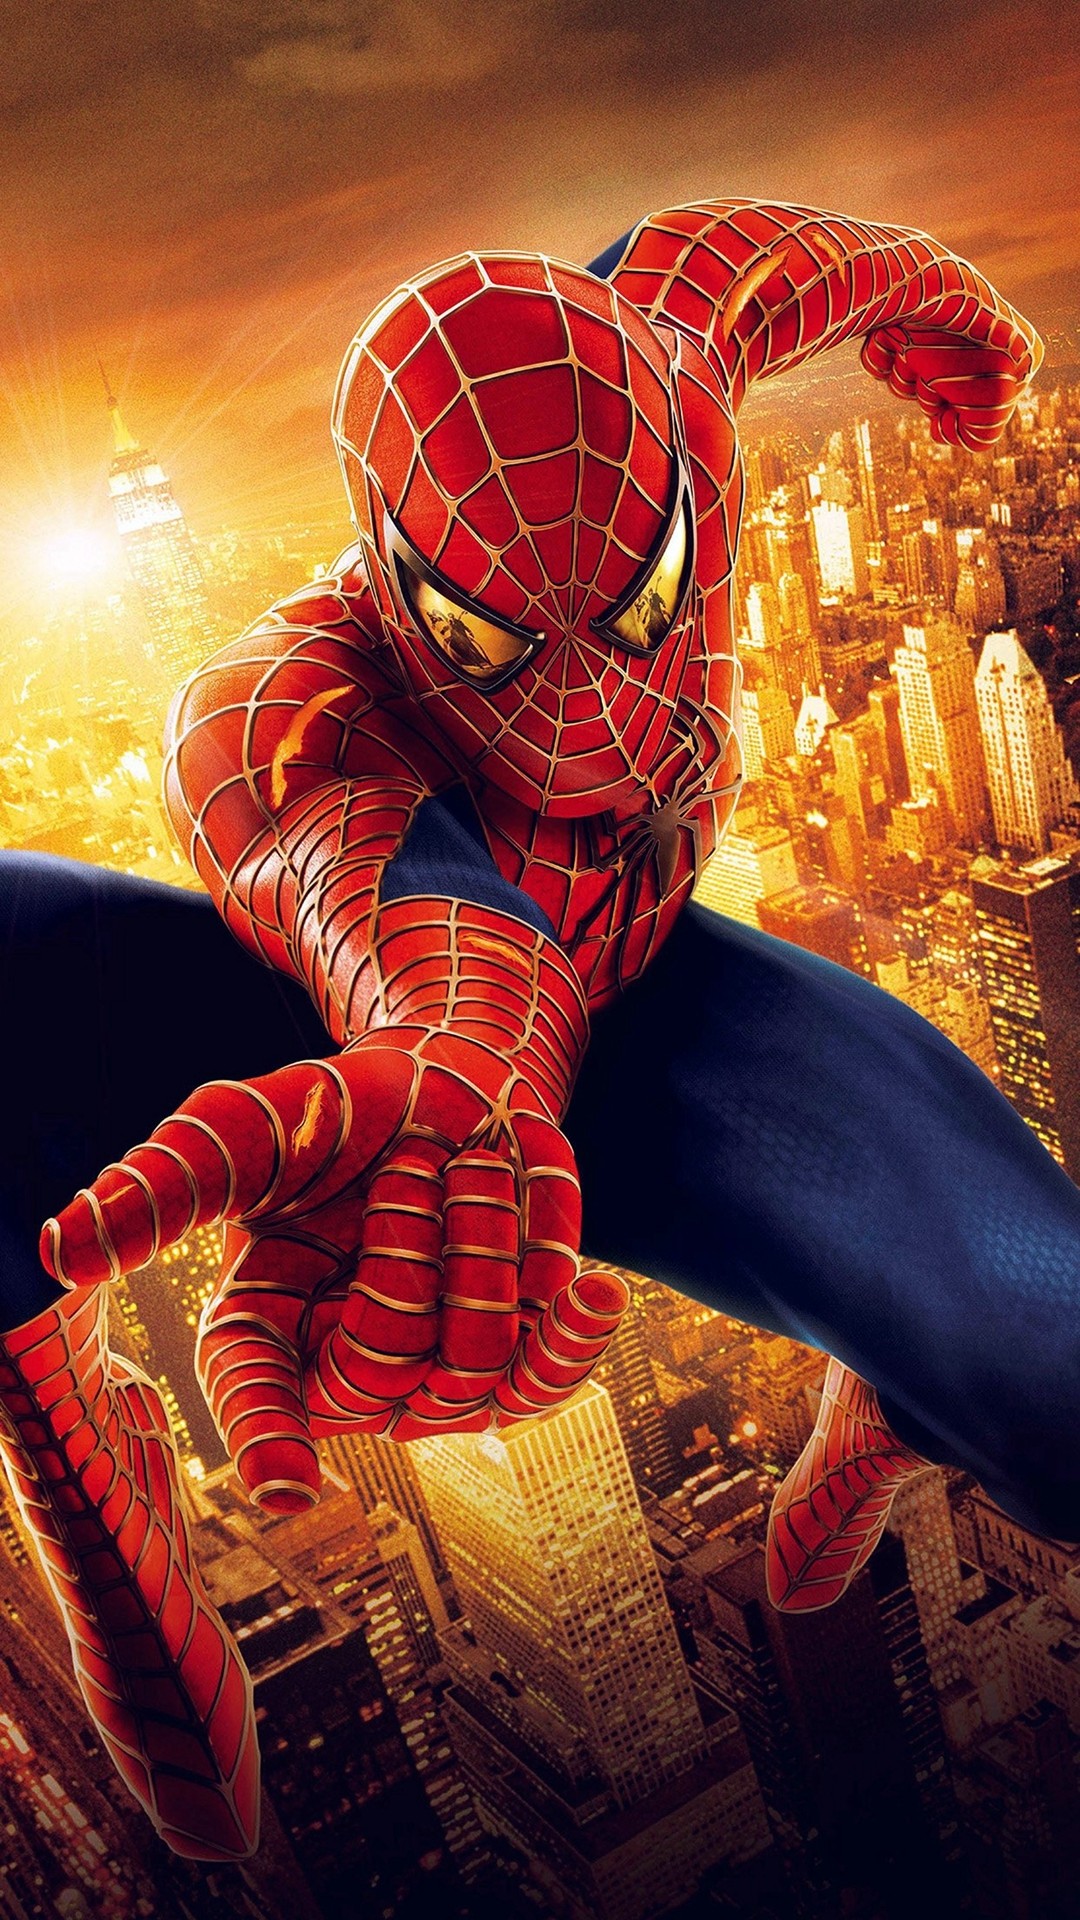 1080x1920 ... Marvel Iphone Wallpaper Spiderman Illust Art Hero Marvel iphone 6  wallpaper ilikewallpaper_com ...